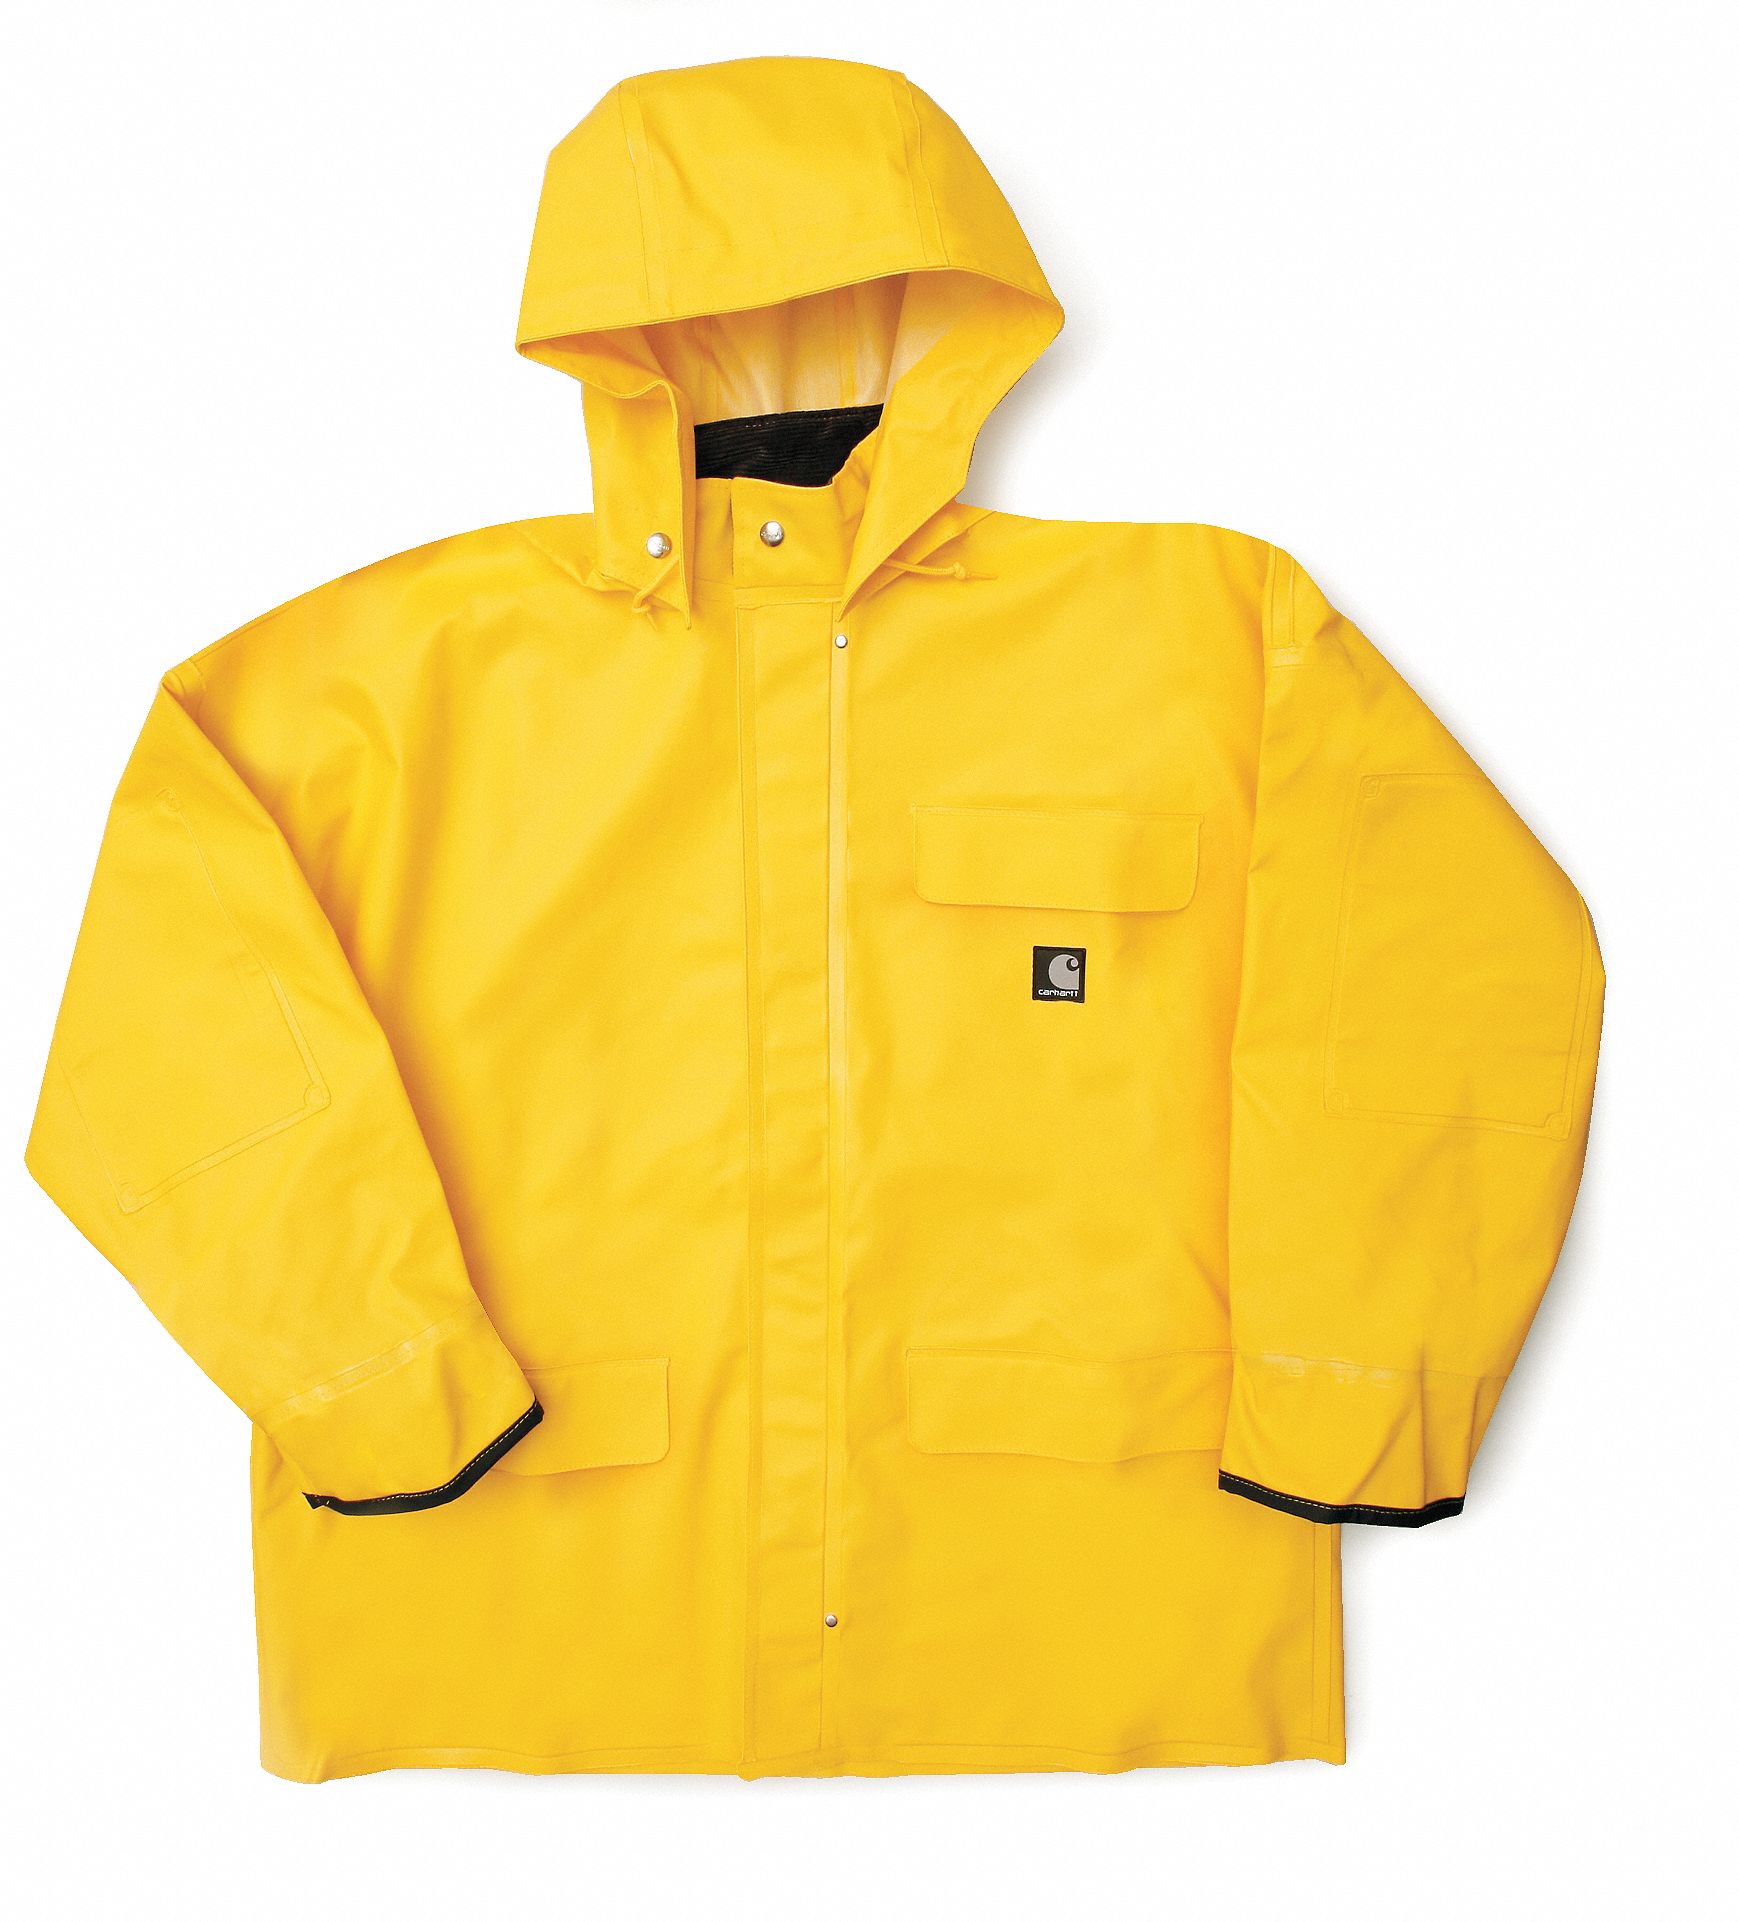 Rain Jacket with Detachable Hood - Grainger